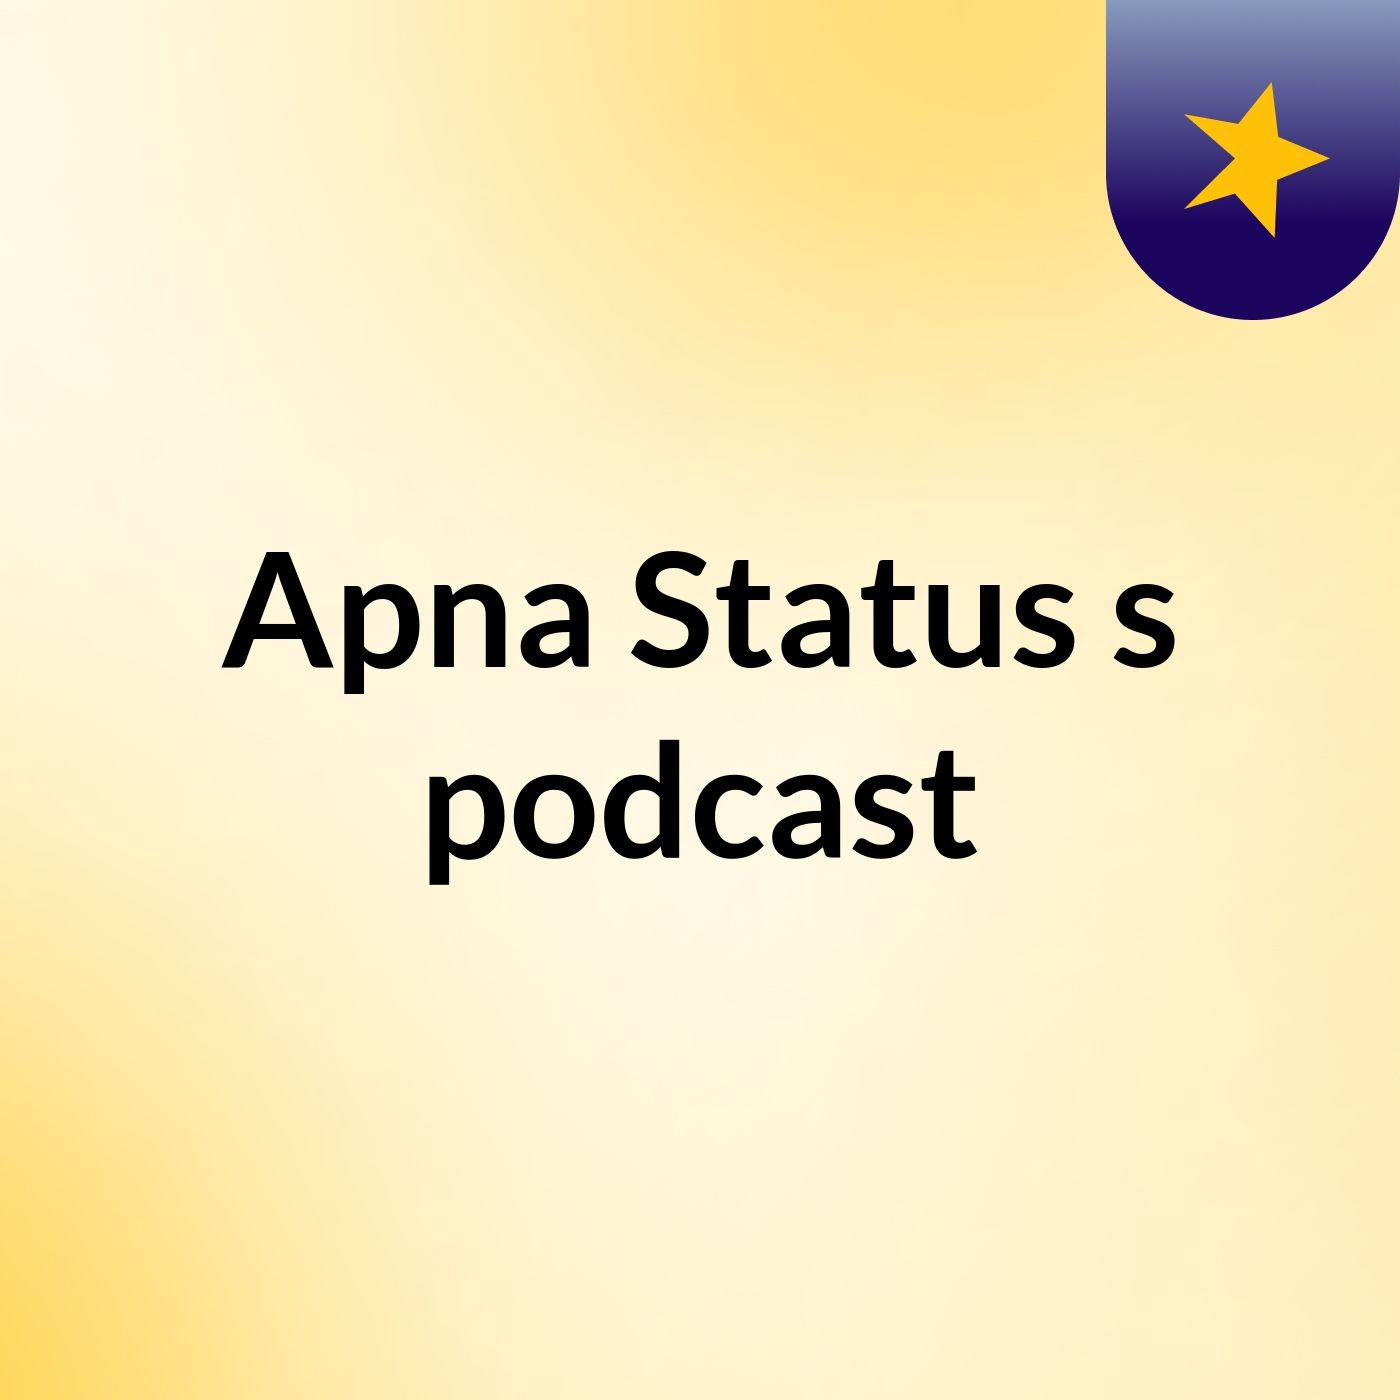 Apna Status's podcast